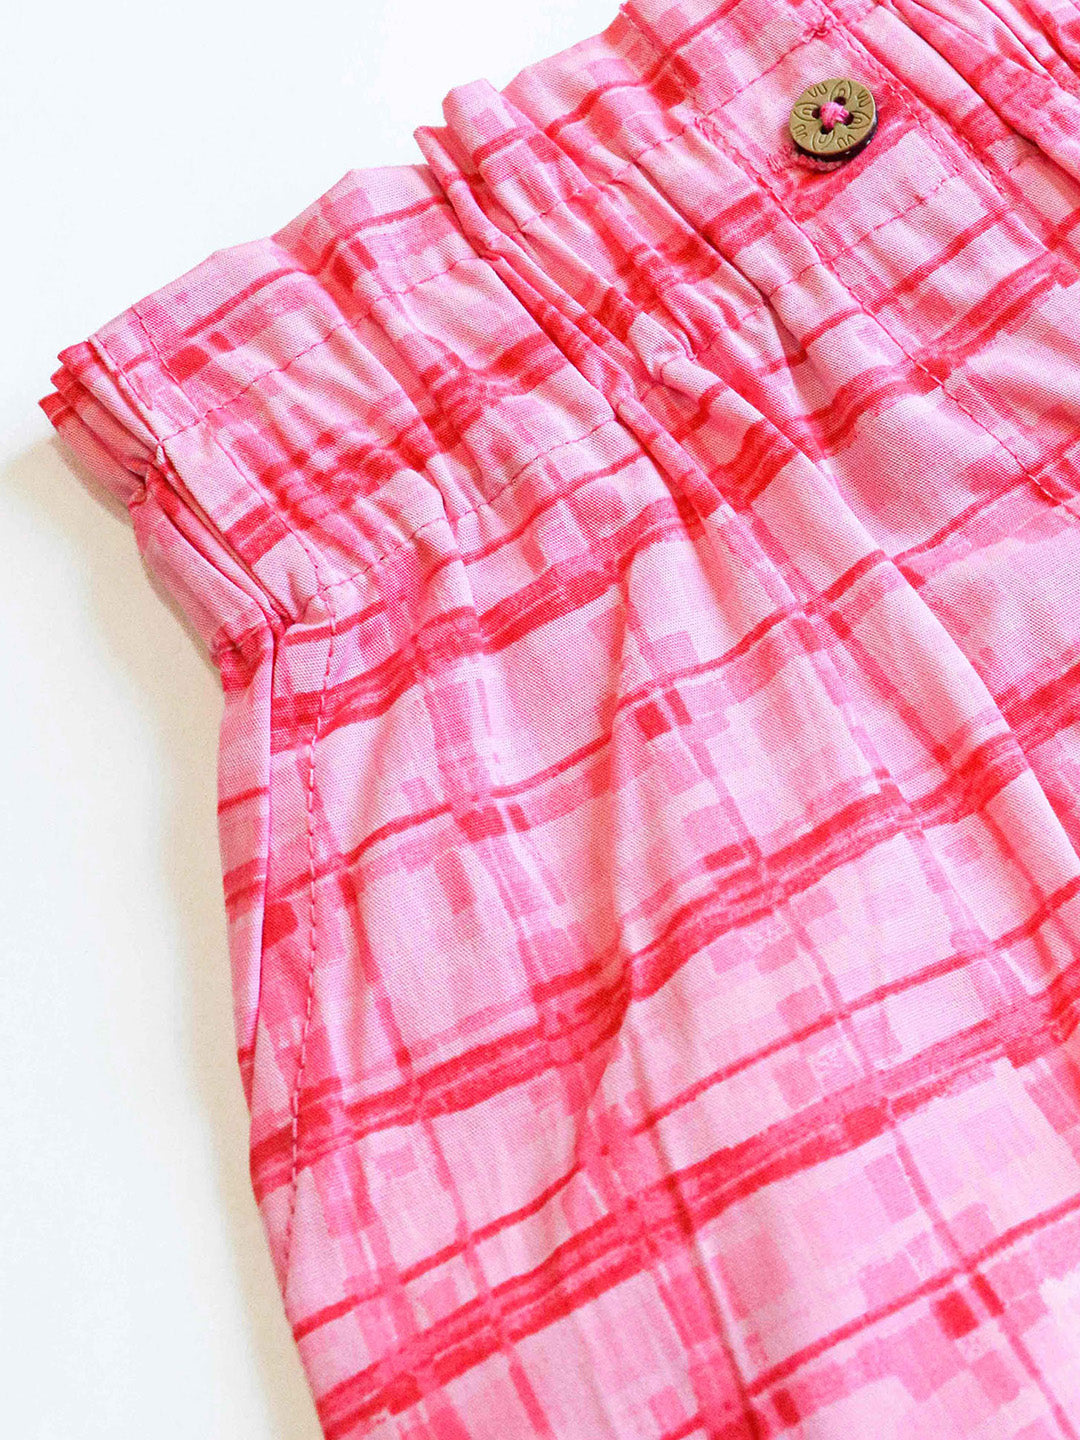 Plaid Printed Top and Skirt Cotton Set